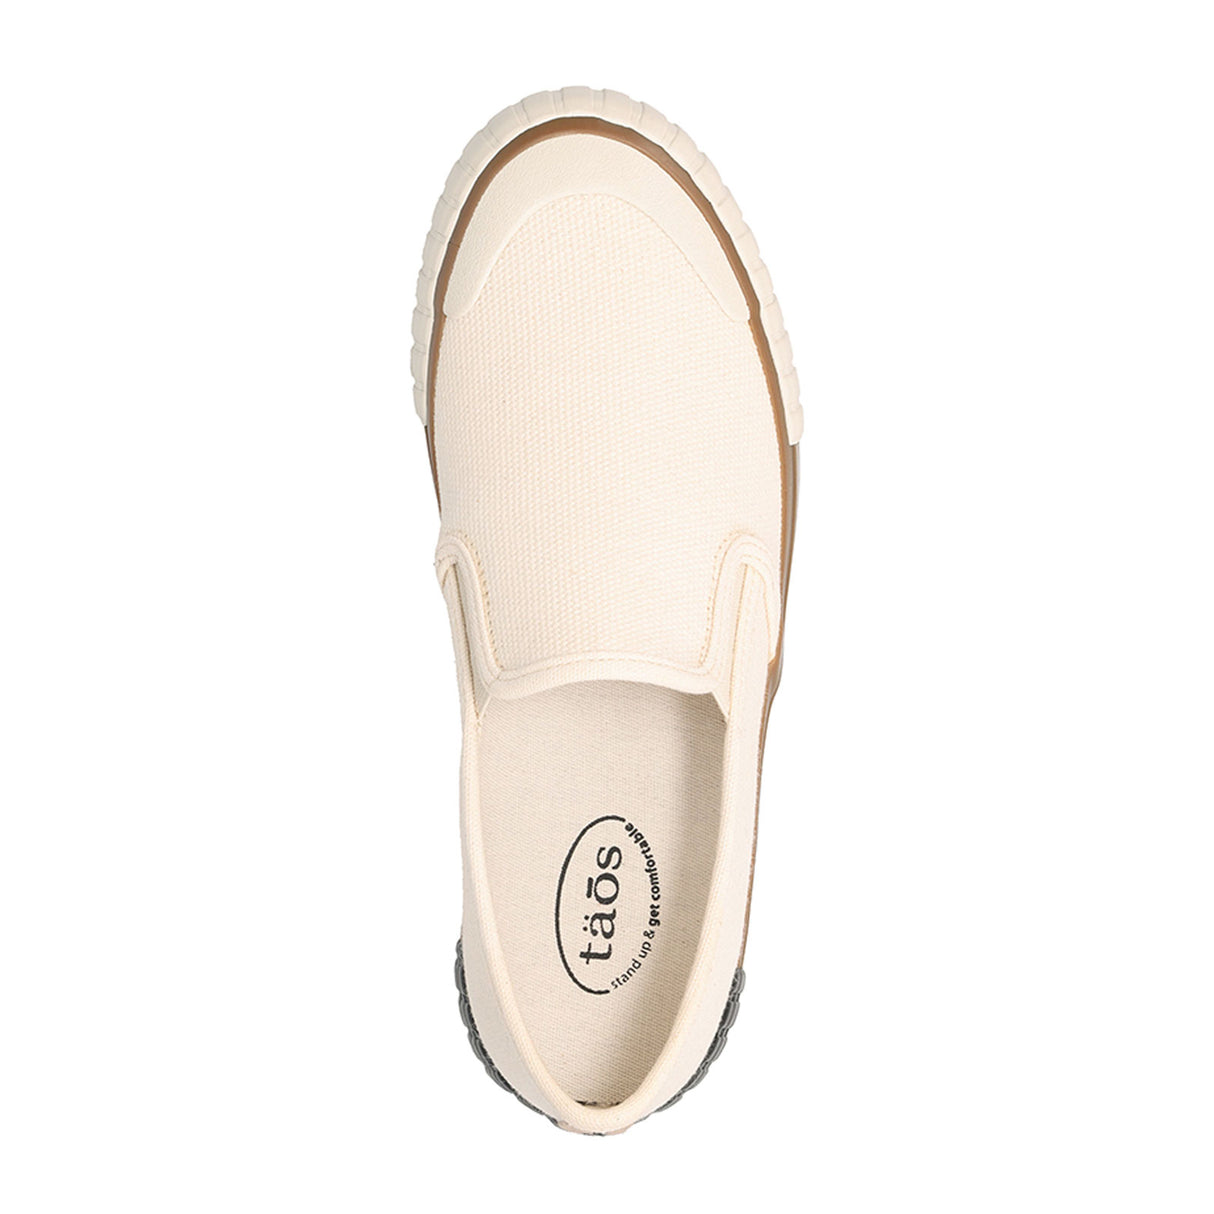 Taos Double Vision Slip On Sneaker (Women) - Cream Dress-Casual - Slip-Ons - The Heel Shoe Fitters